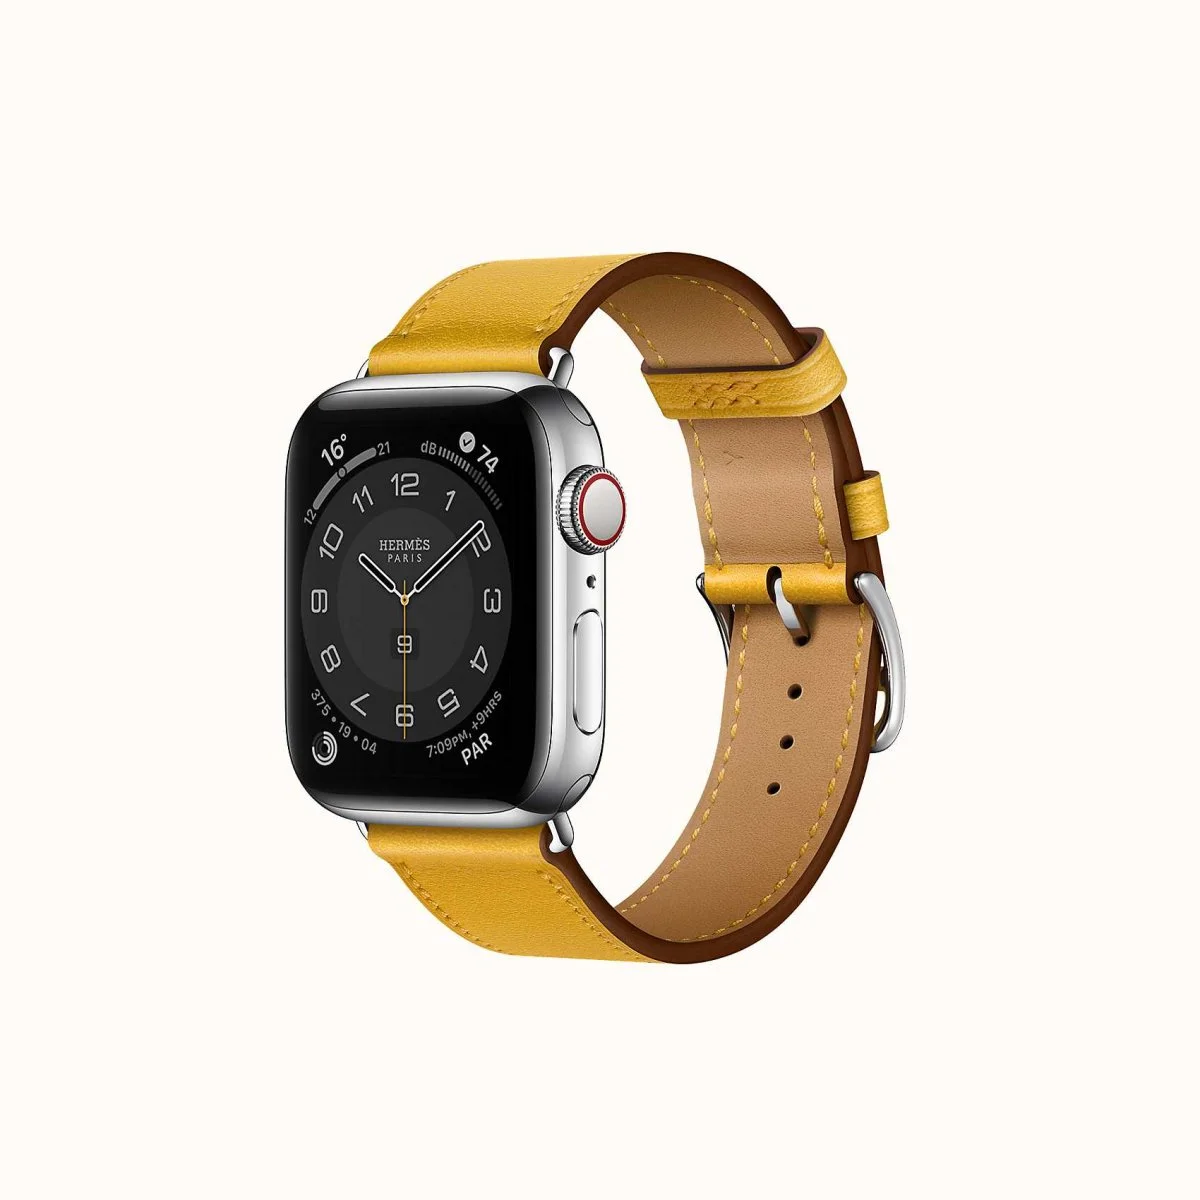 Řemínek iMore Single Tour Apple Watch Series 4/5/6/SE (44mm) - Žlutý